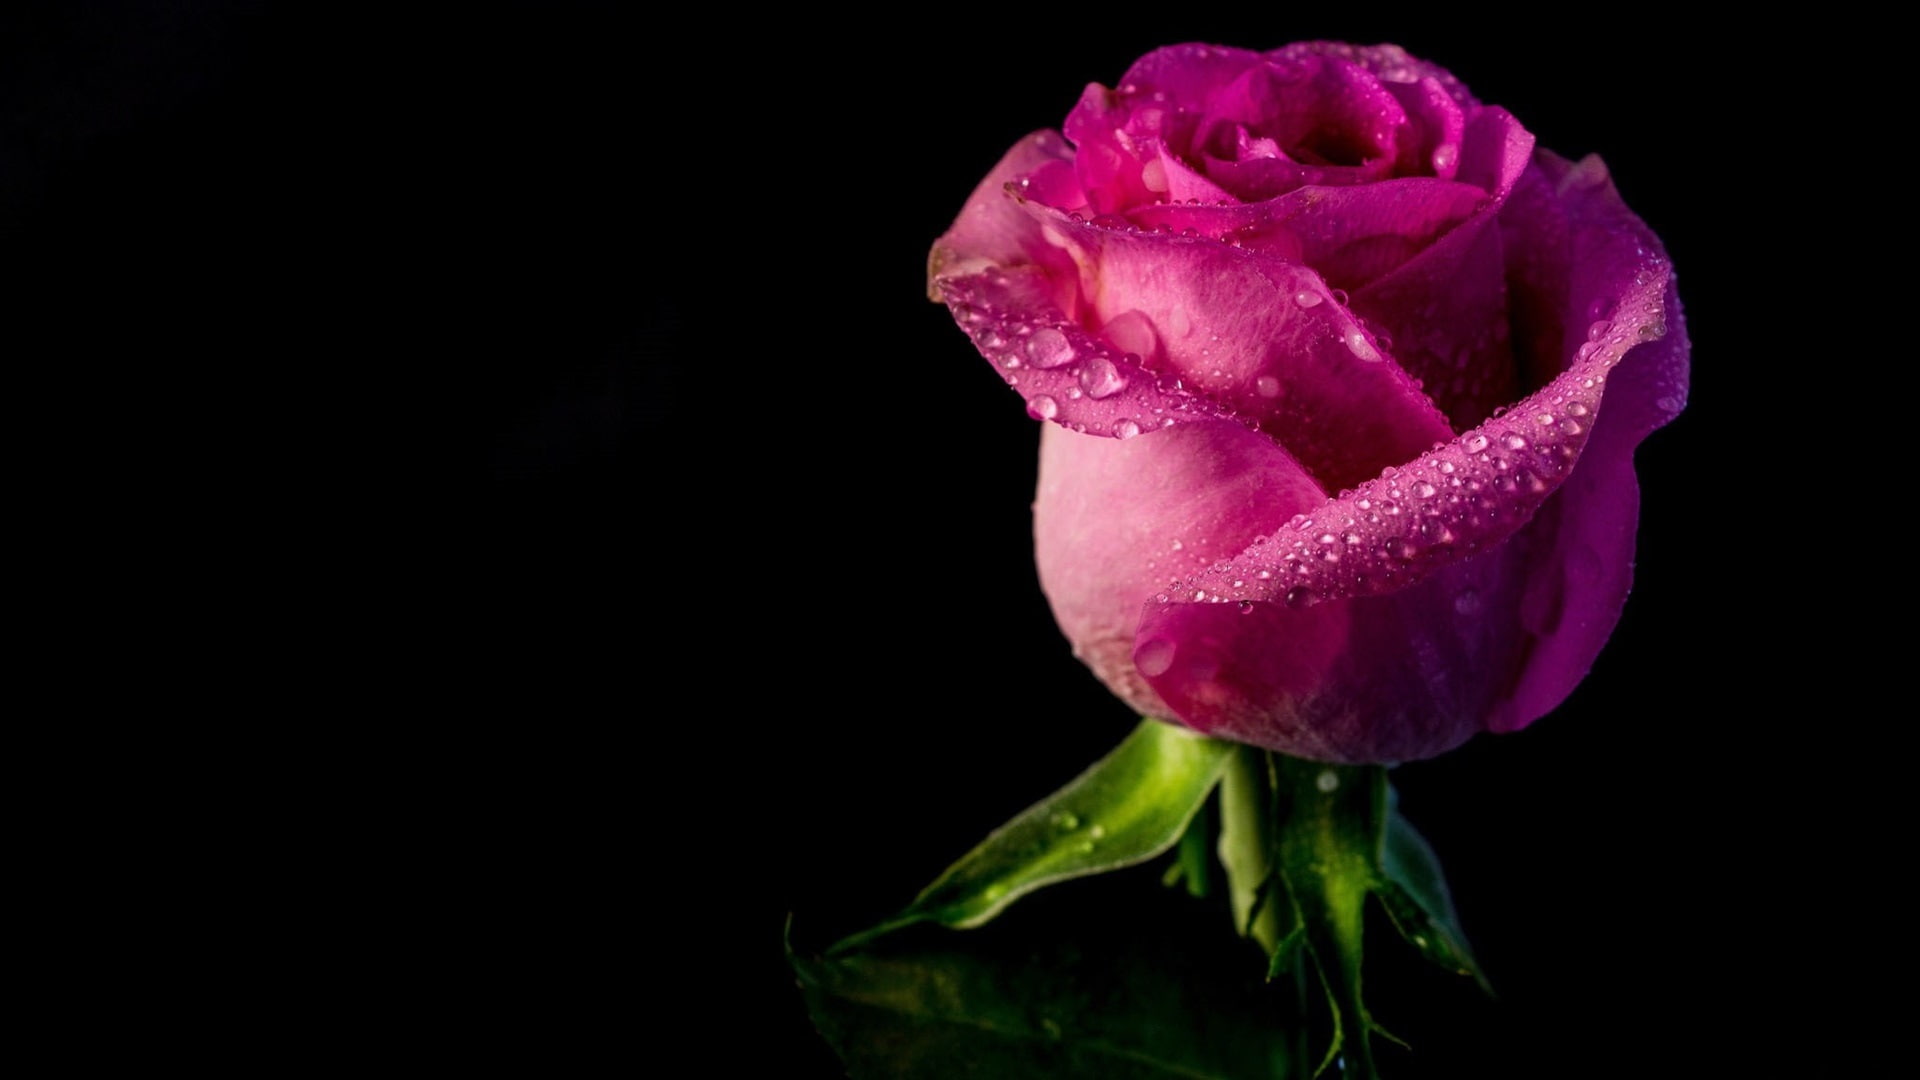 Rose, bud, petals, water drops, black background